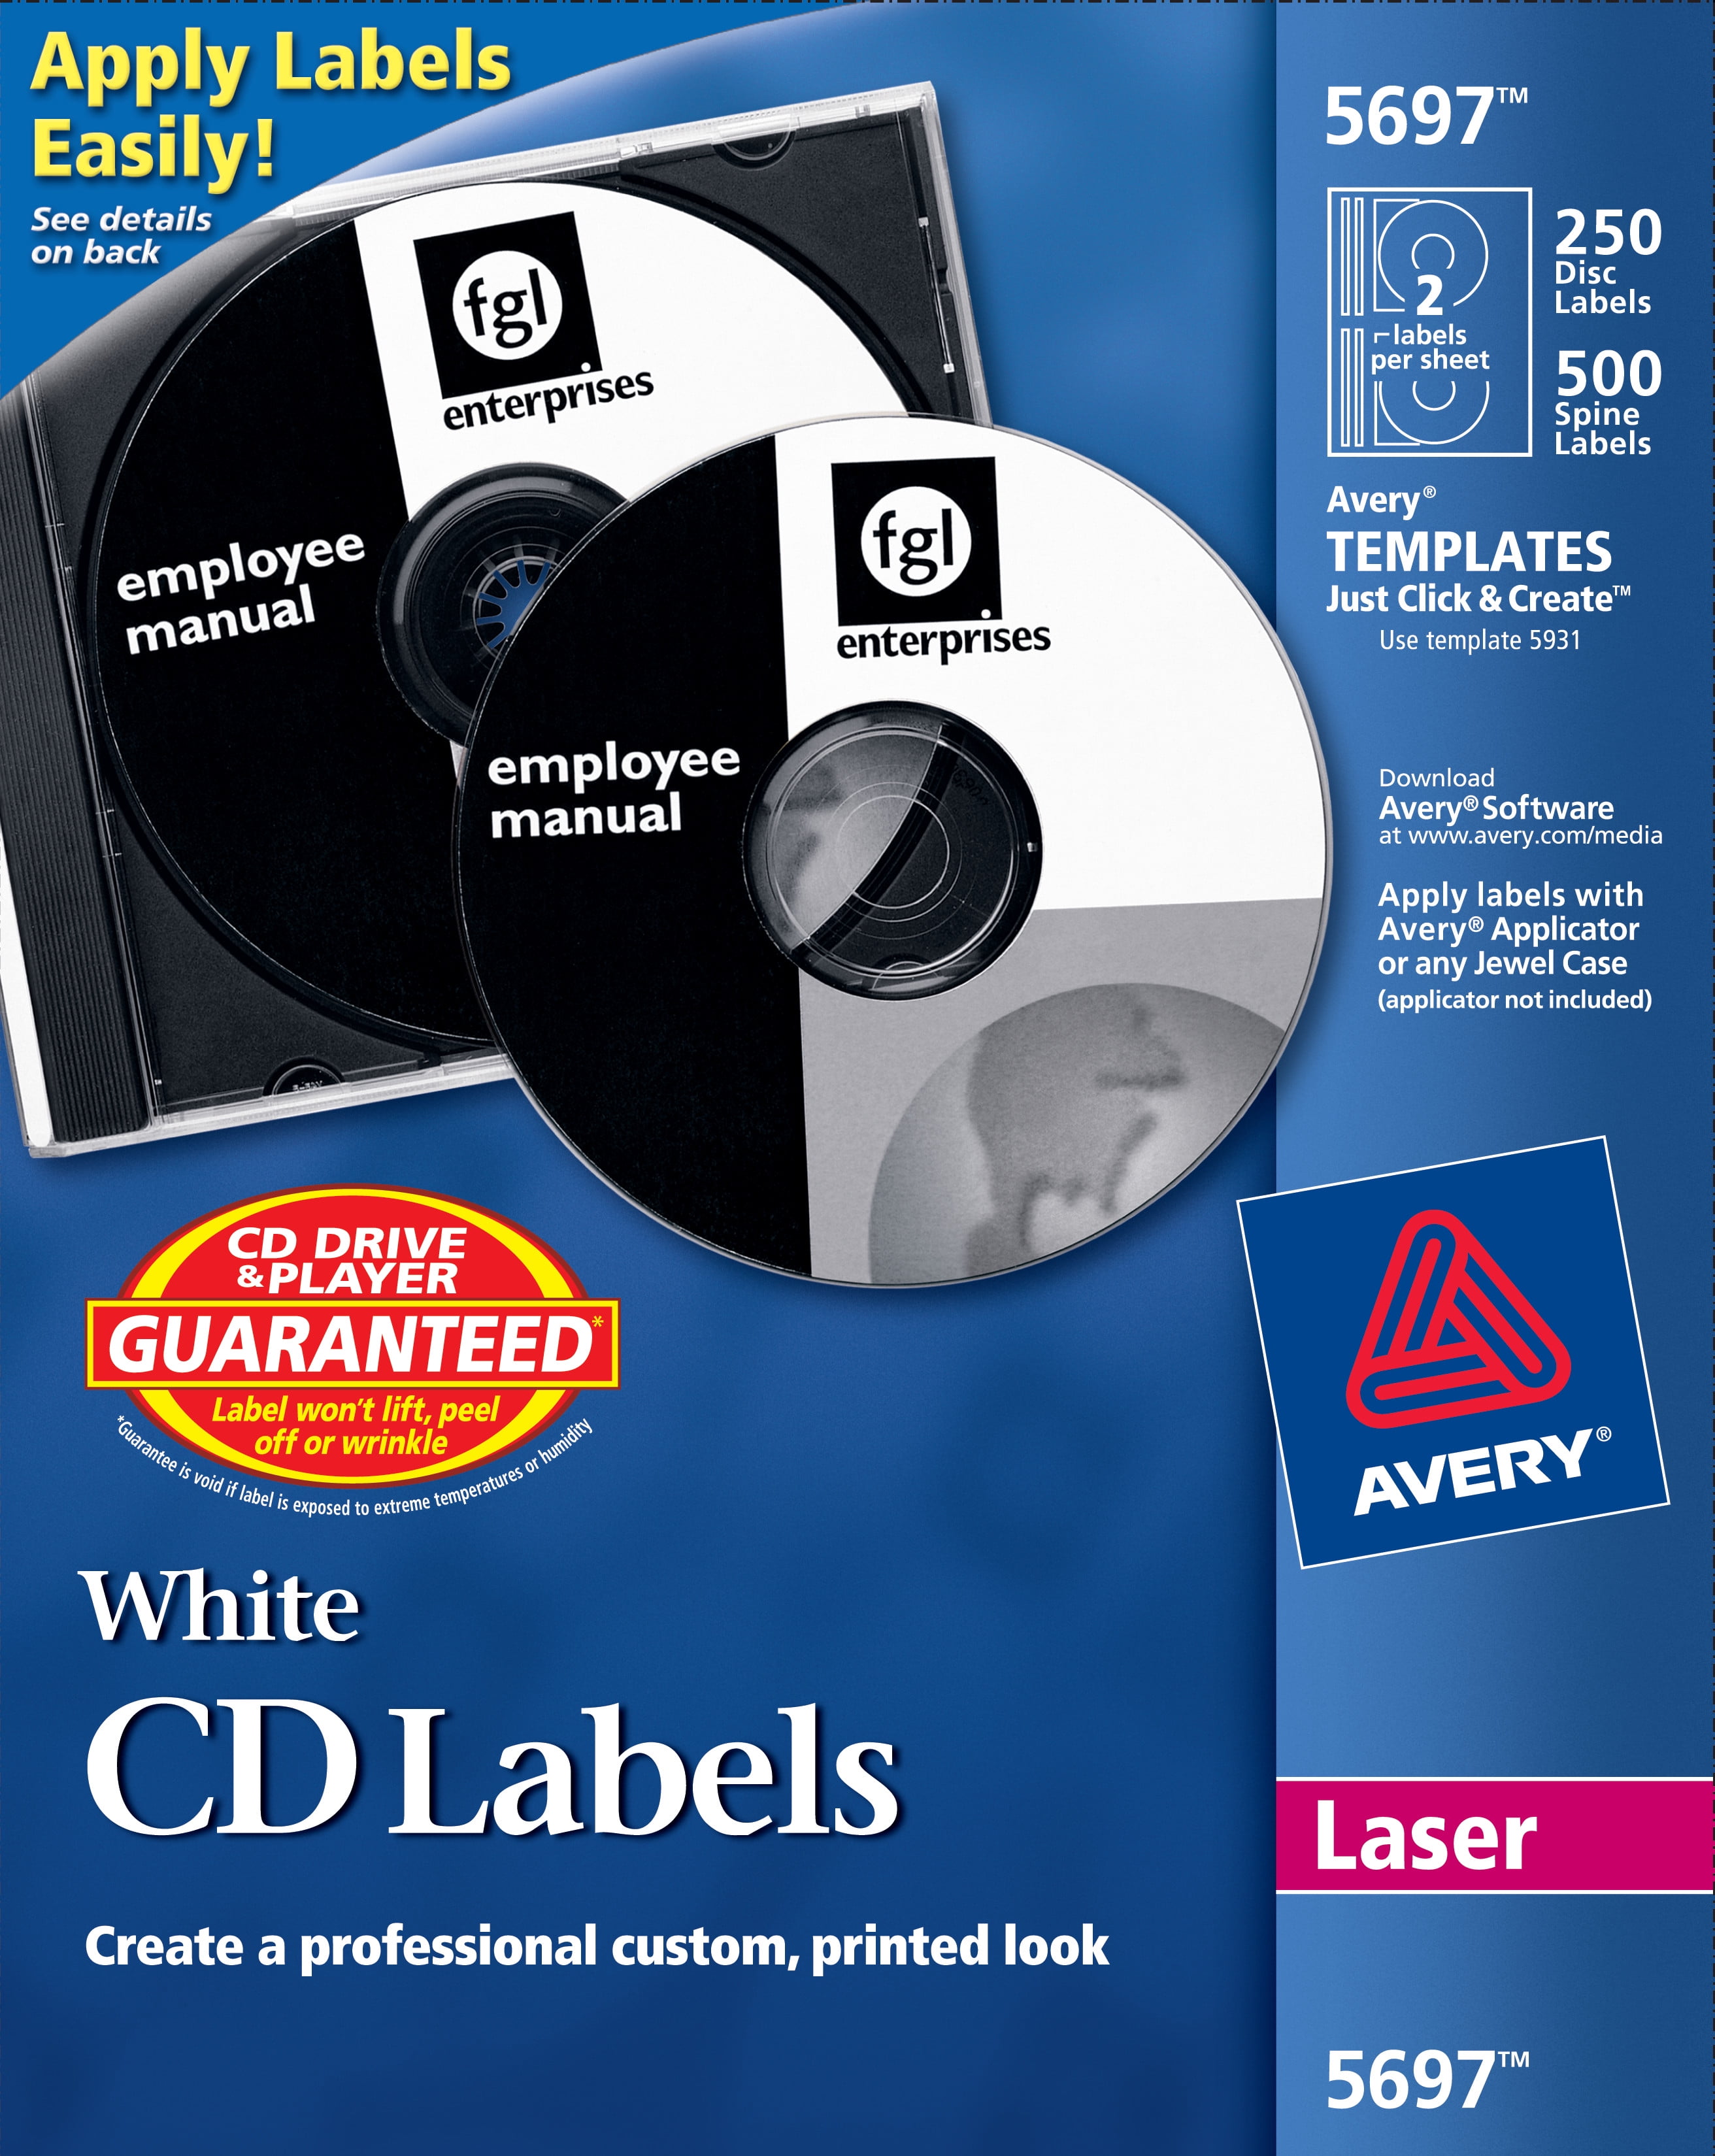 Avery CD Labels, White Matte, 250 CD Labels 500 Case Spine Labels (5697) - Walmart.com